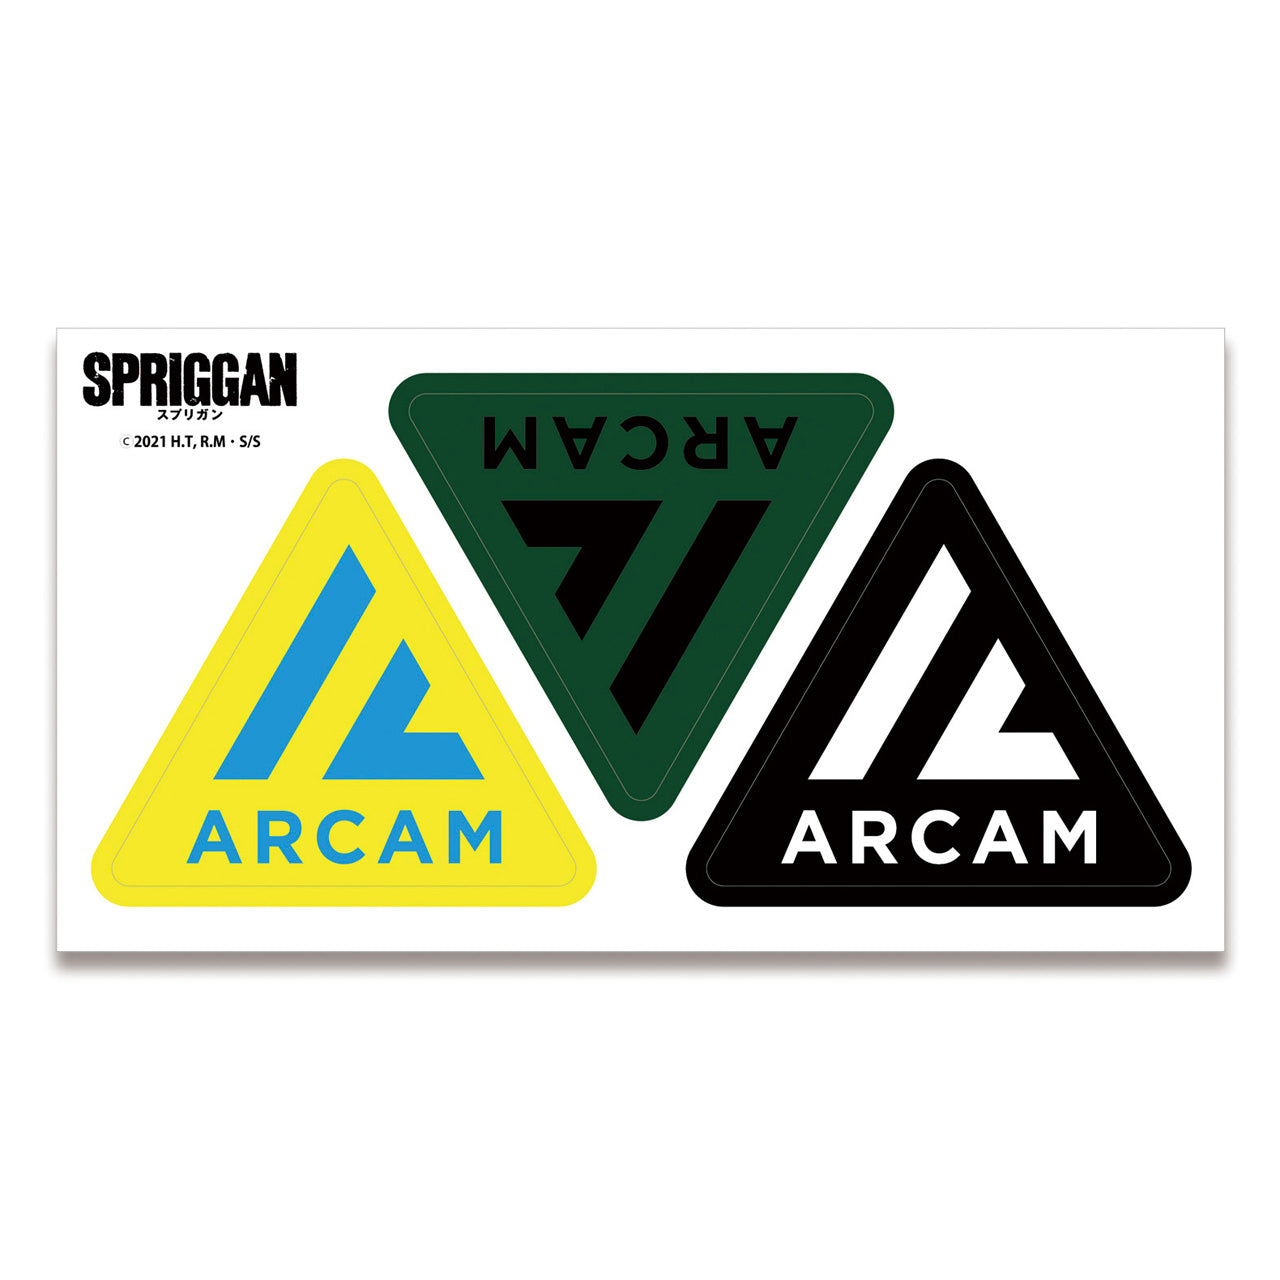 Arcam (em438520) - Profile | Pinterest